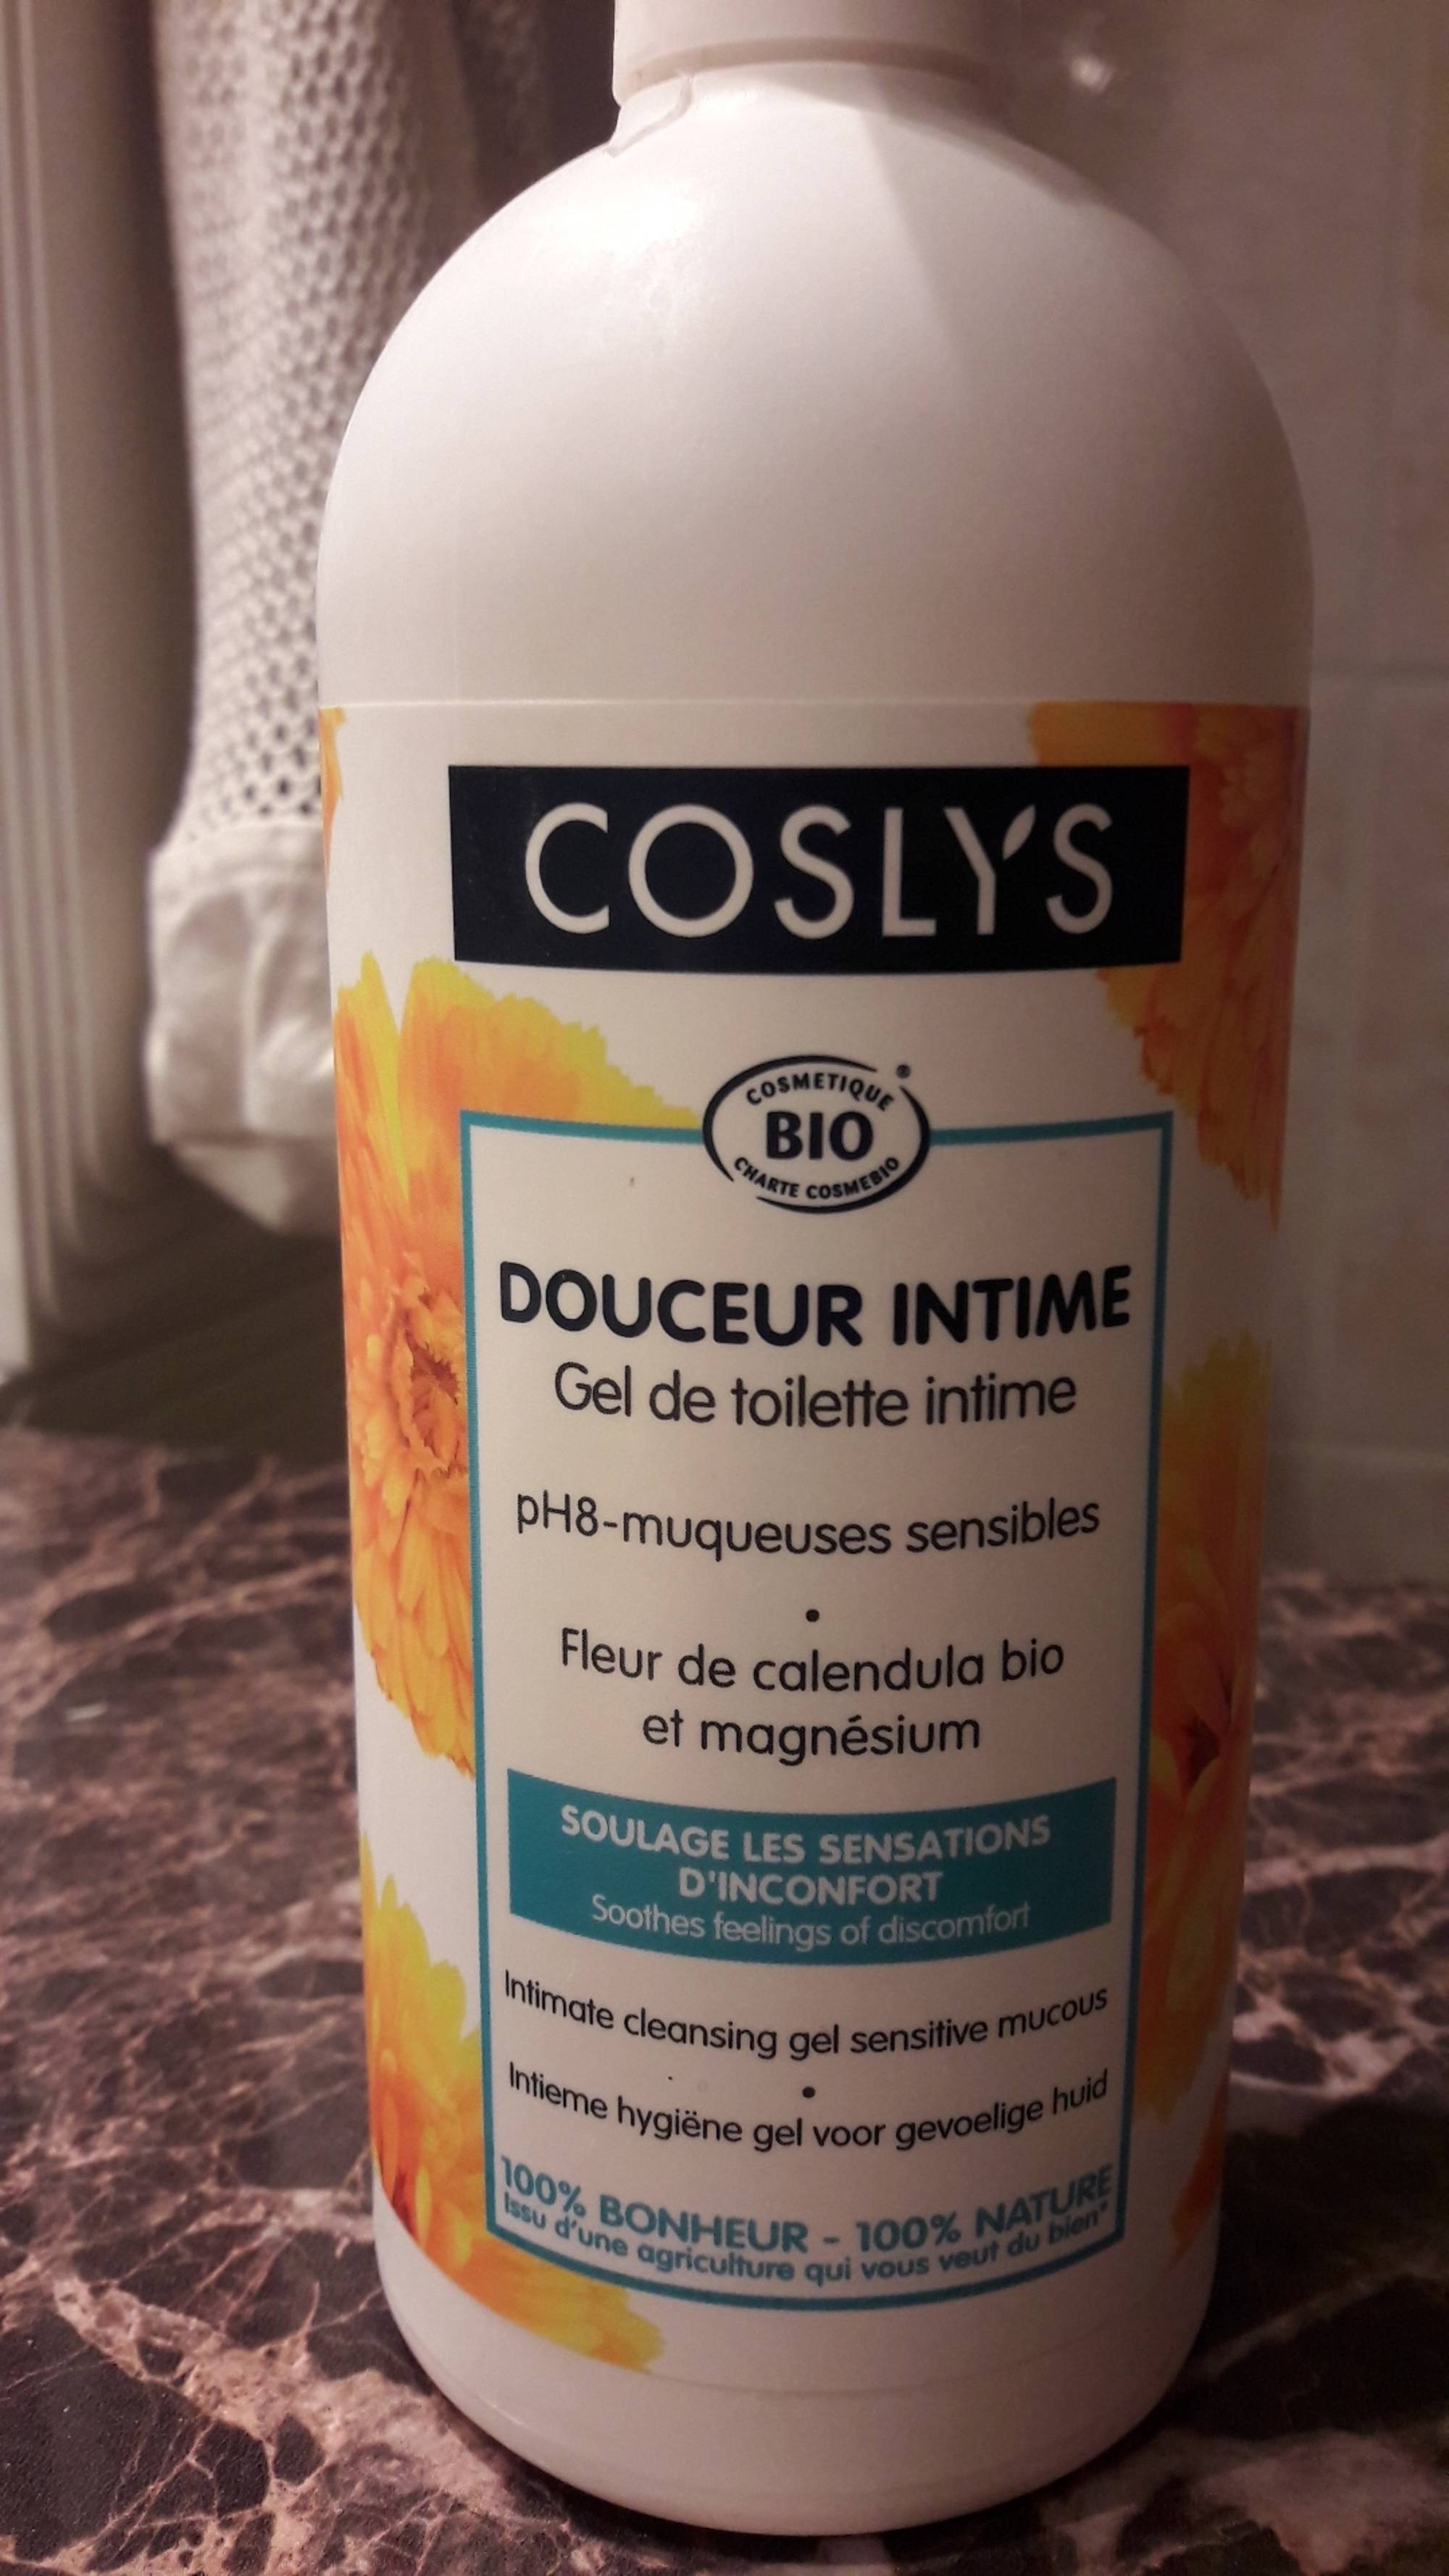 COSLYS - Douceur intime - Gel de toilette intime